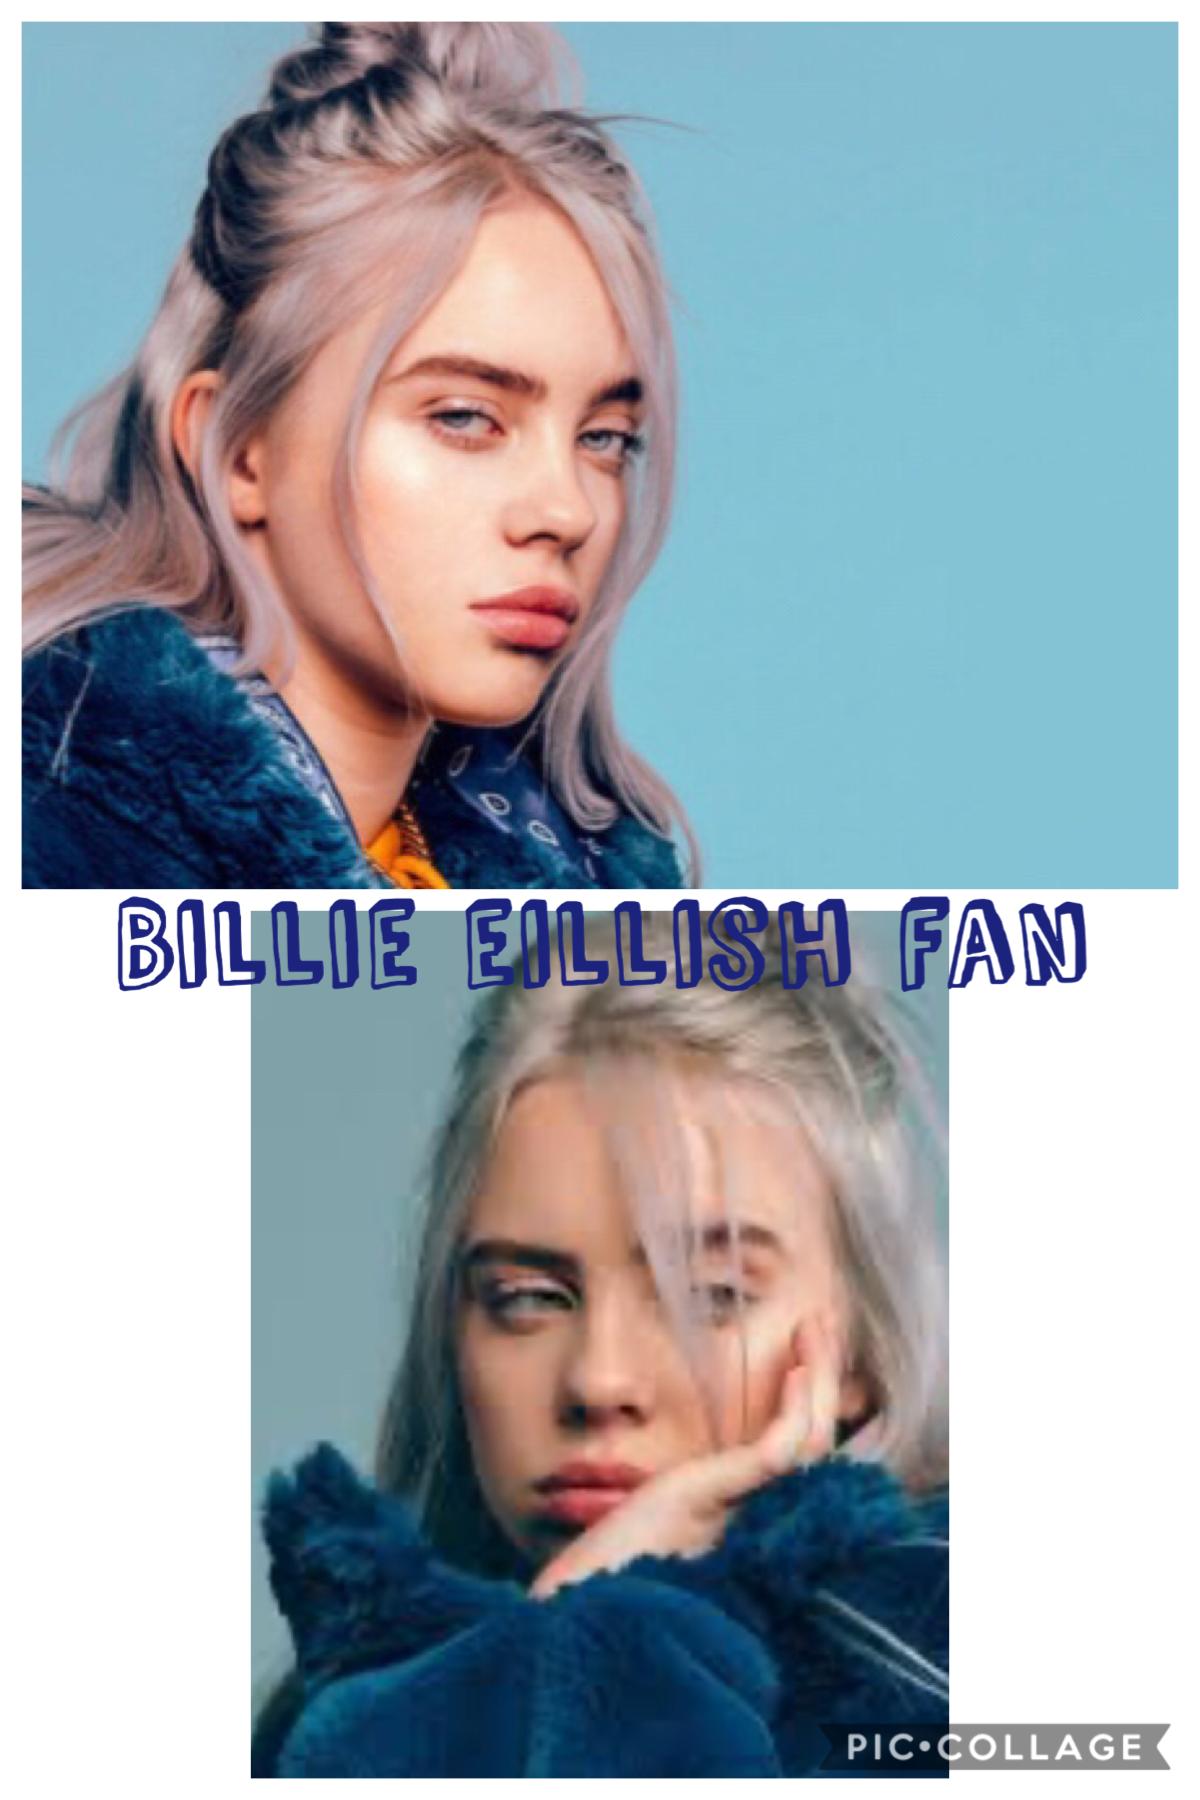 Billie eillish fan